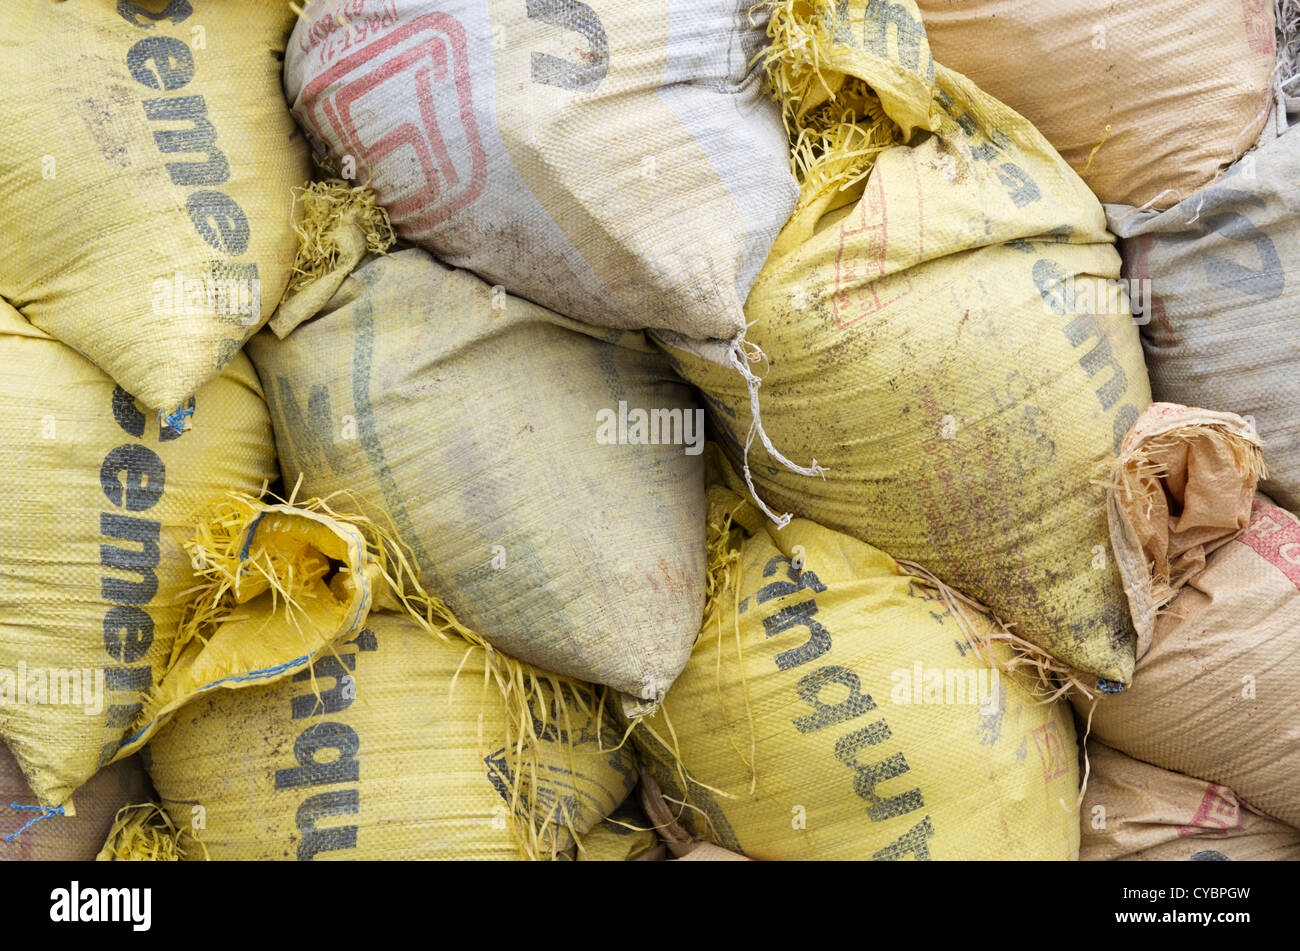 Rice sacks in a market in Kerala India Stock Photo